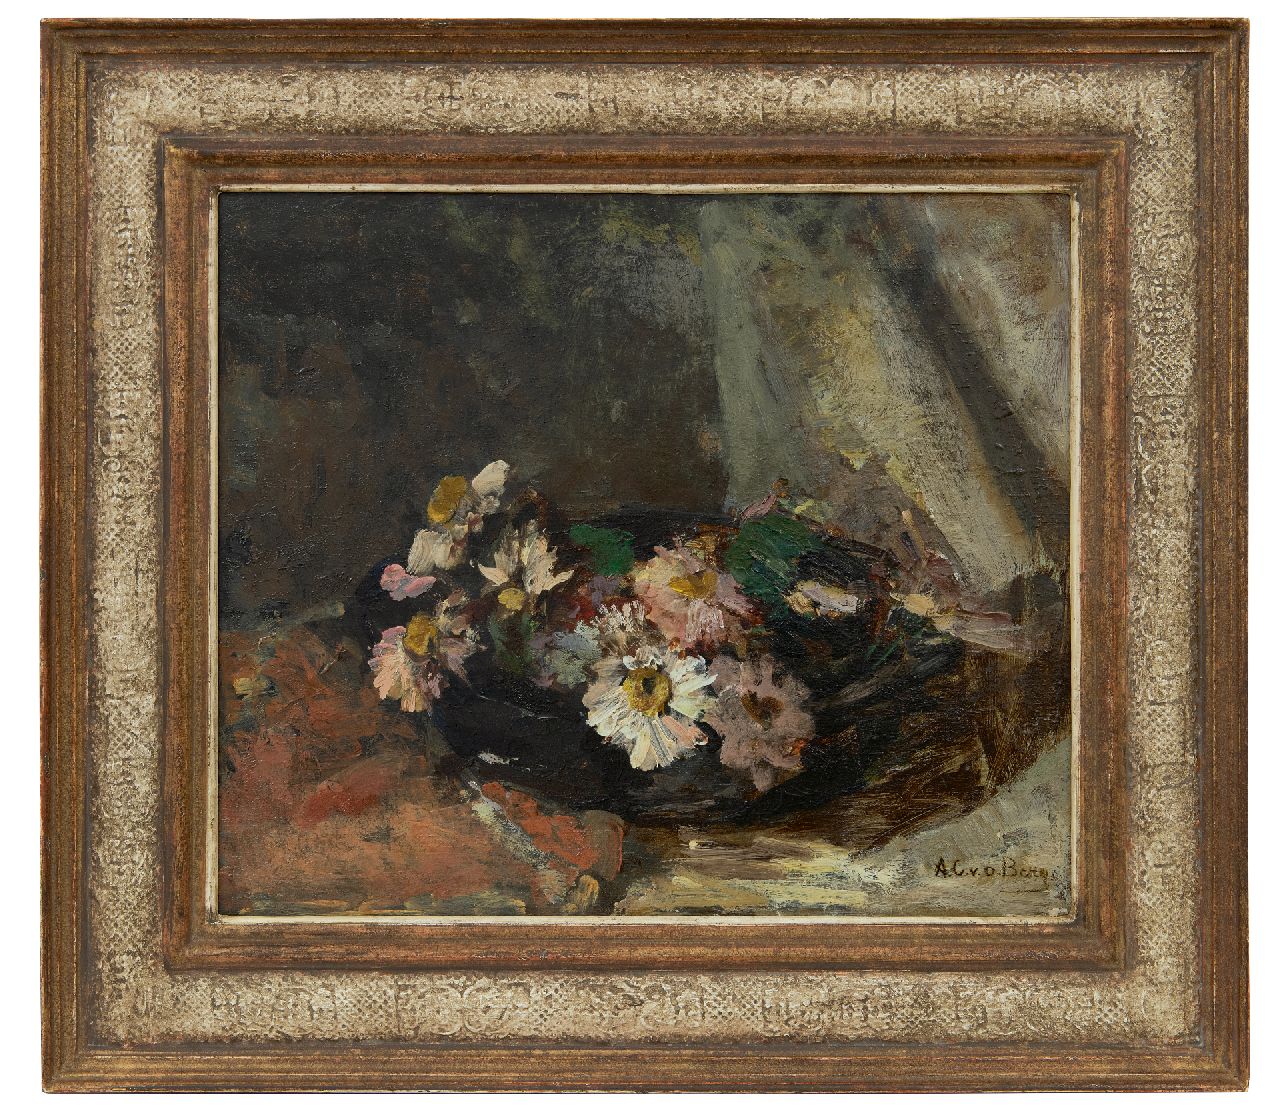 Berg A.C. van den | Anna Carolina 'Ans' van den Berg, Daysies in a bowl, oil on panel 35.0 x 41.1 cm, signed l.r.